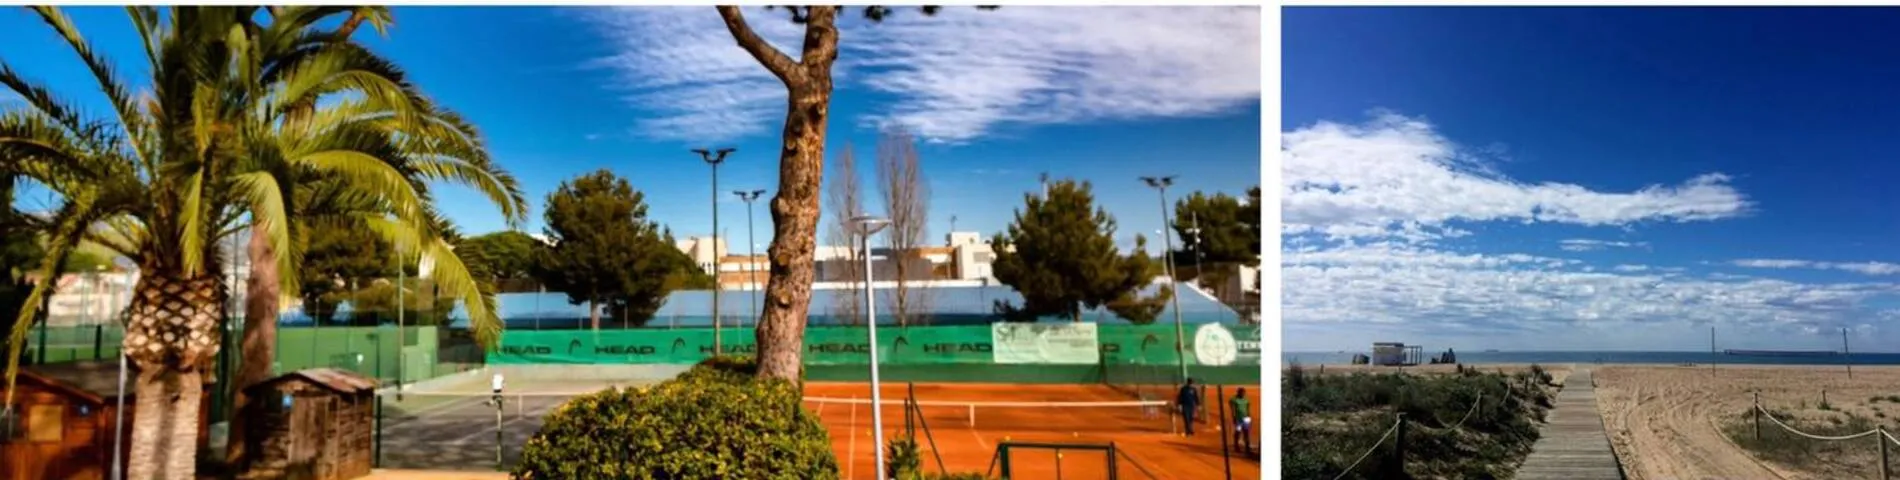 Barcelona Tennis Academy immagine 1